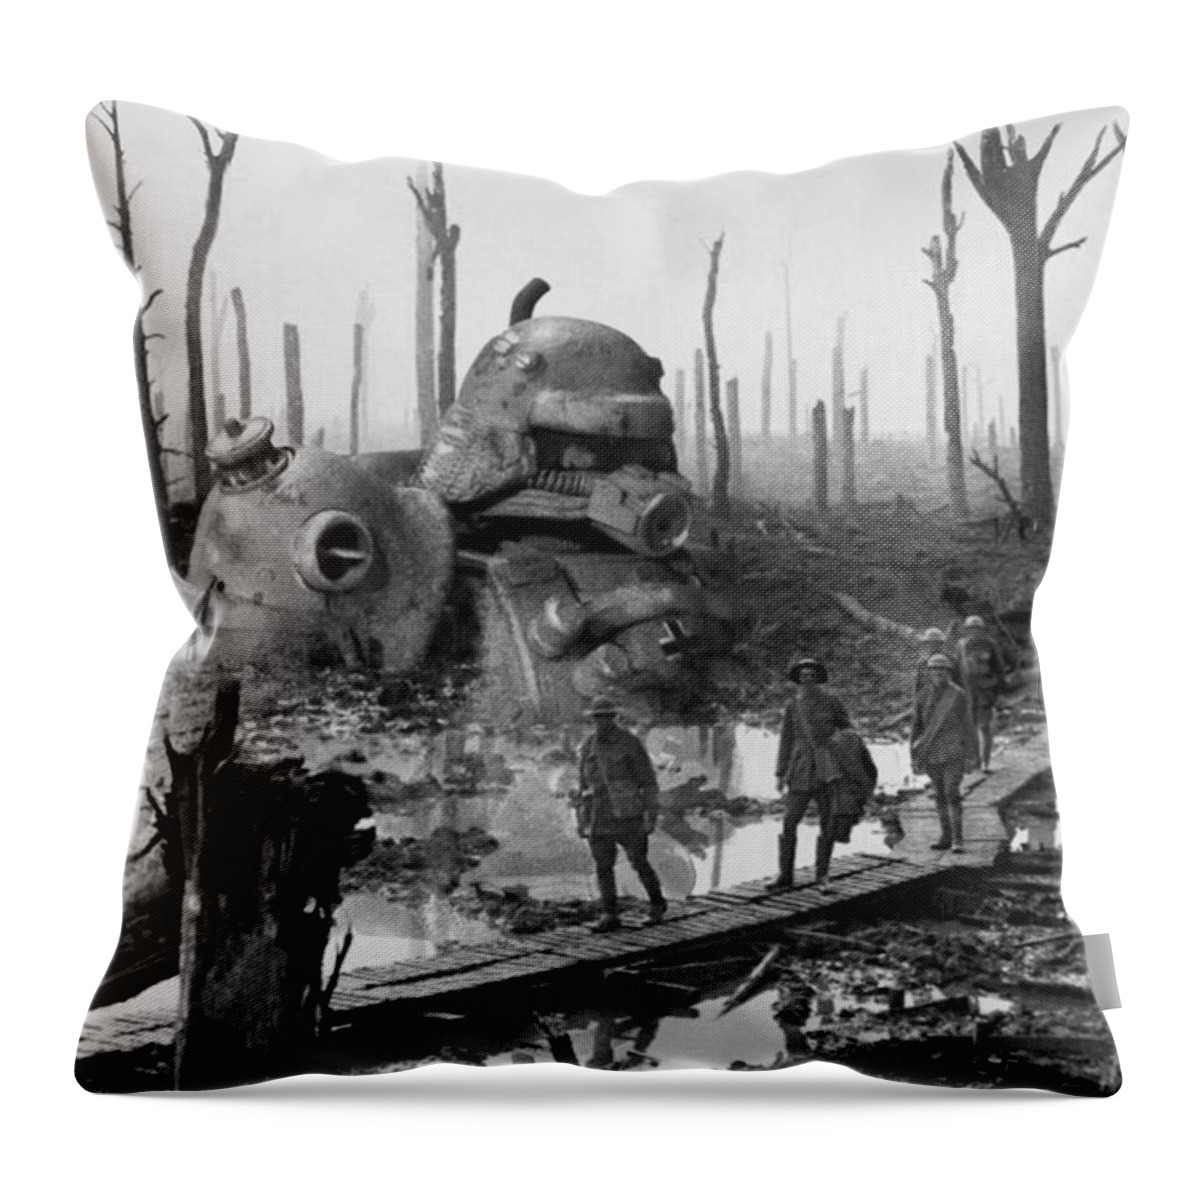 Scifi Throw Pillow featuring the digital art Battle of Passchendaele by Andrea Gatti